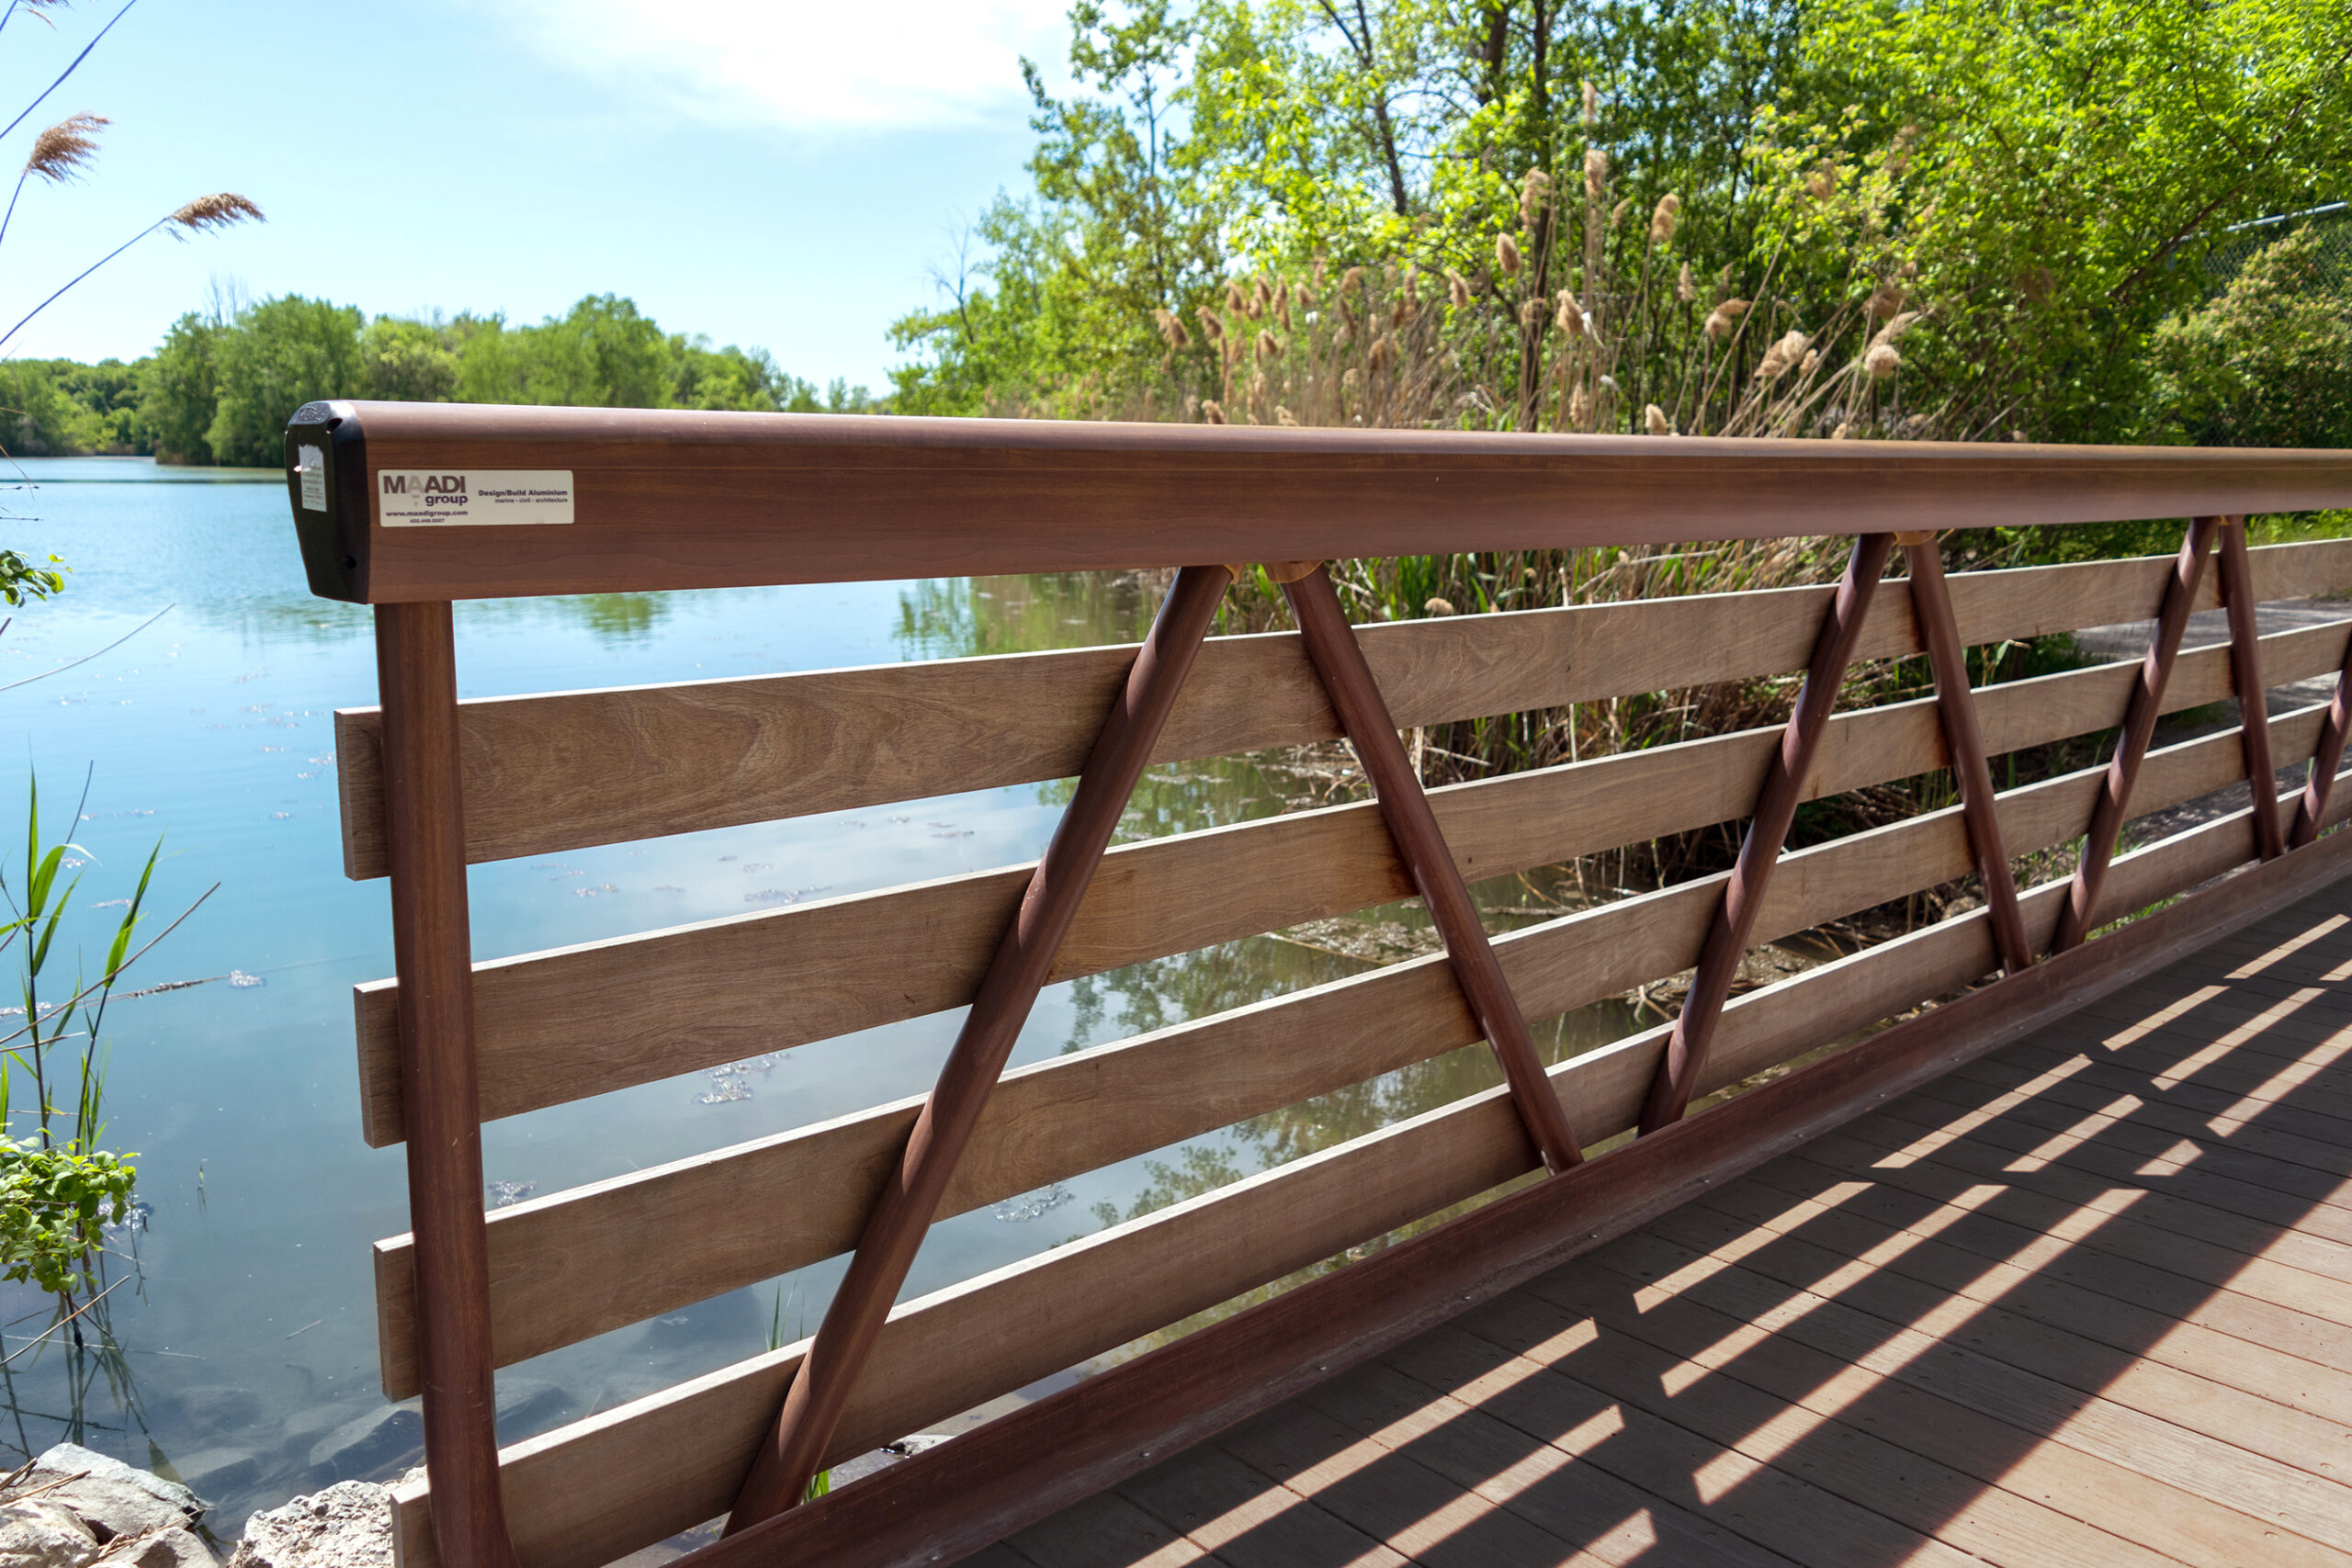 Aluminum guardrail with faux-wood finish